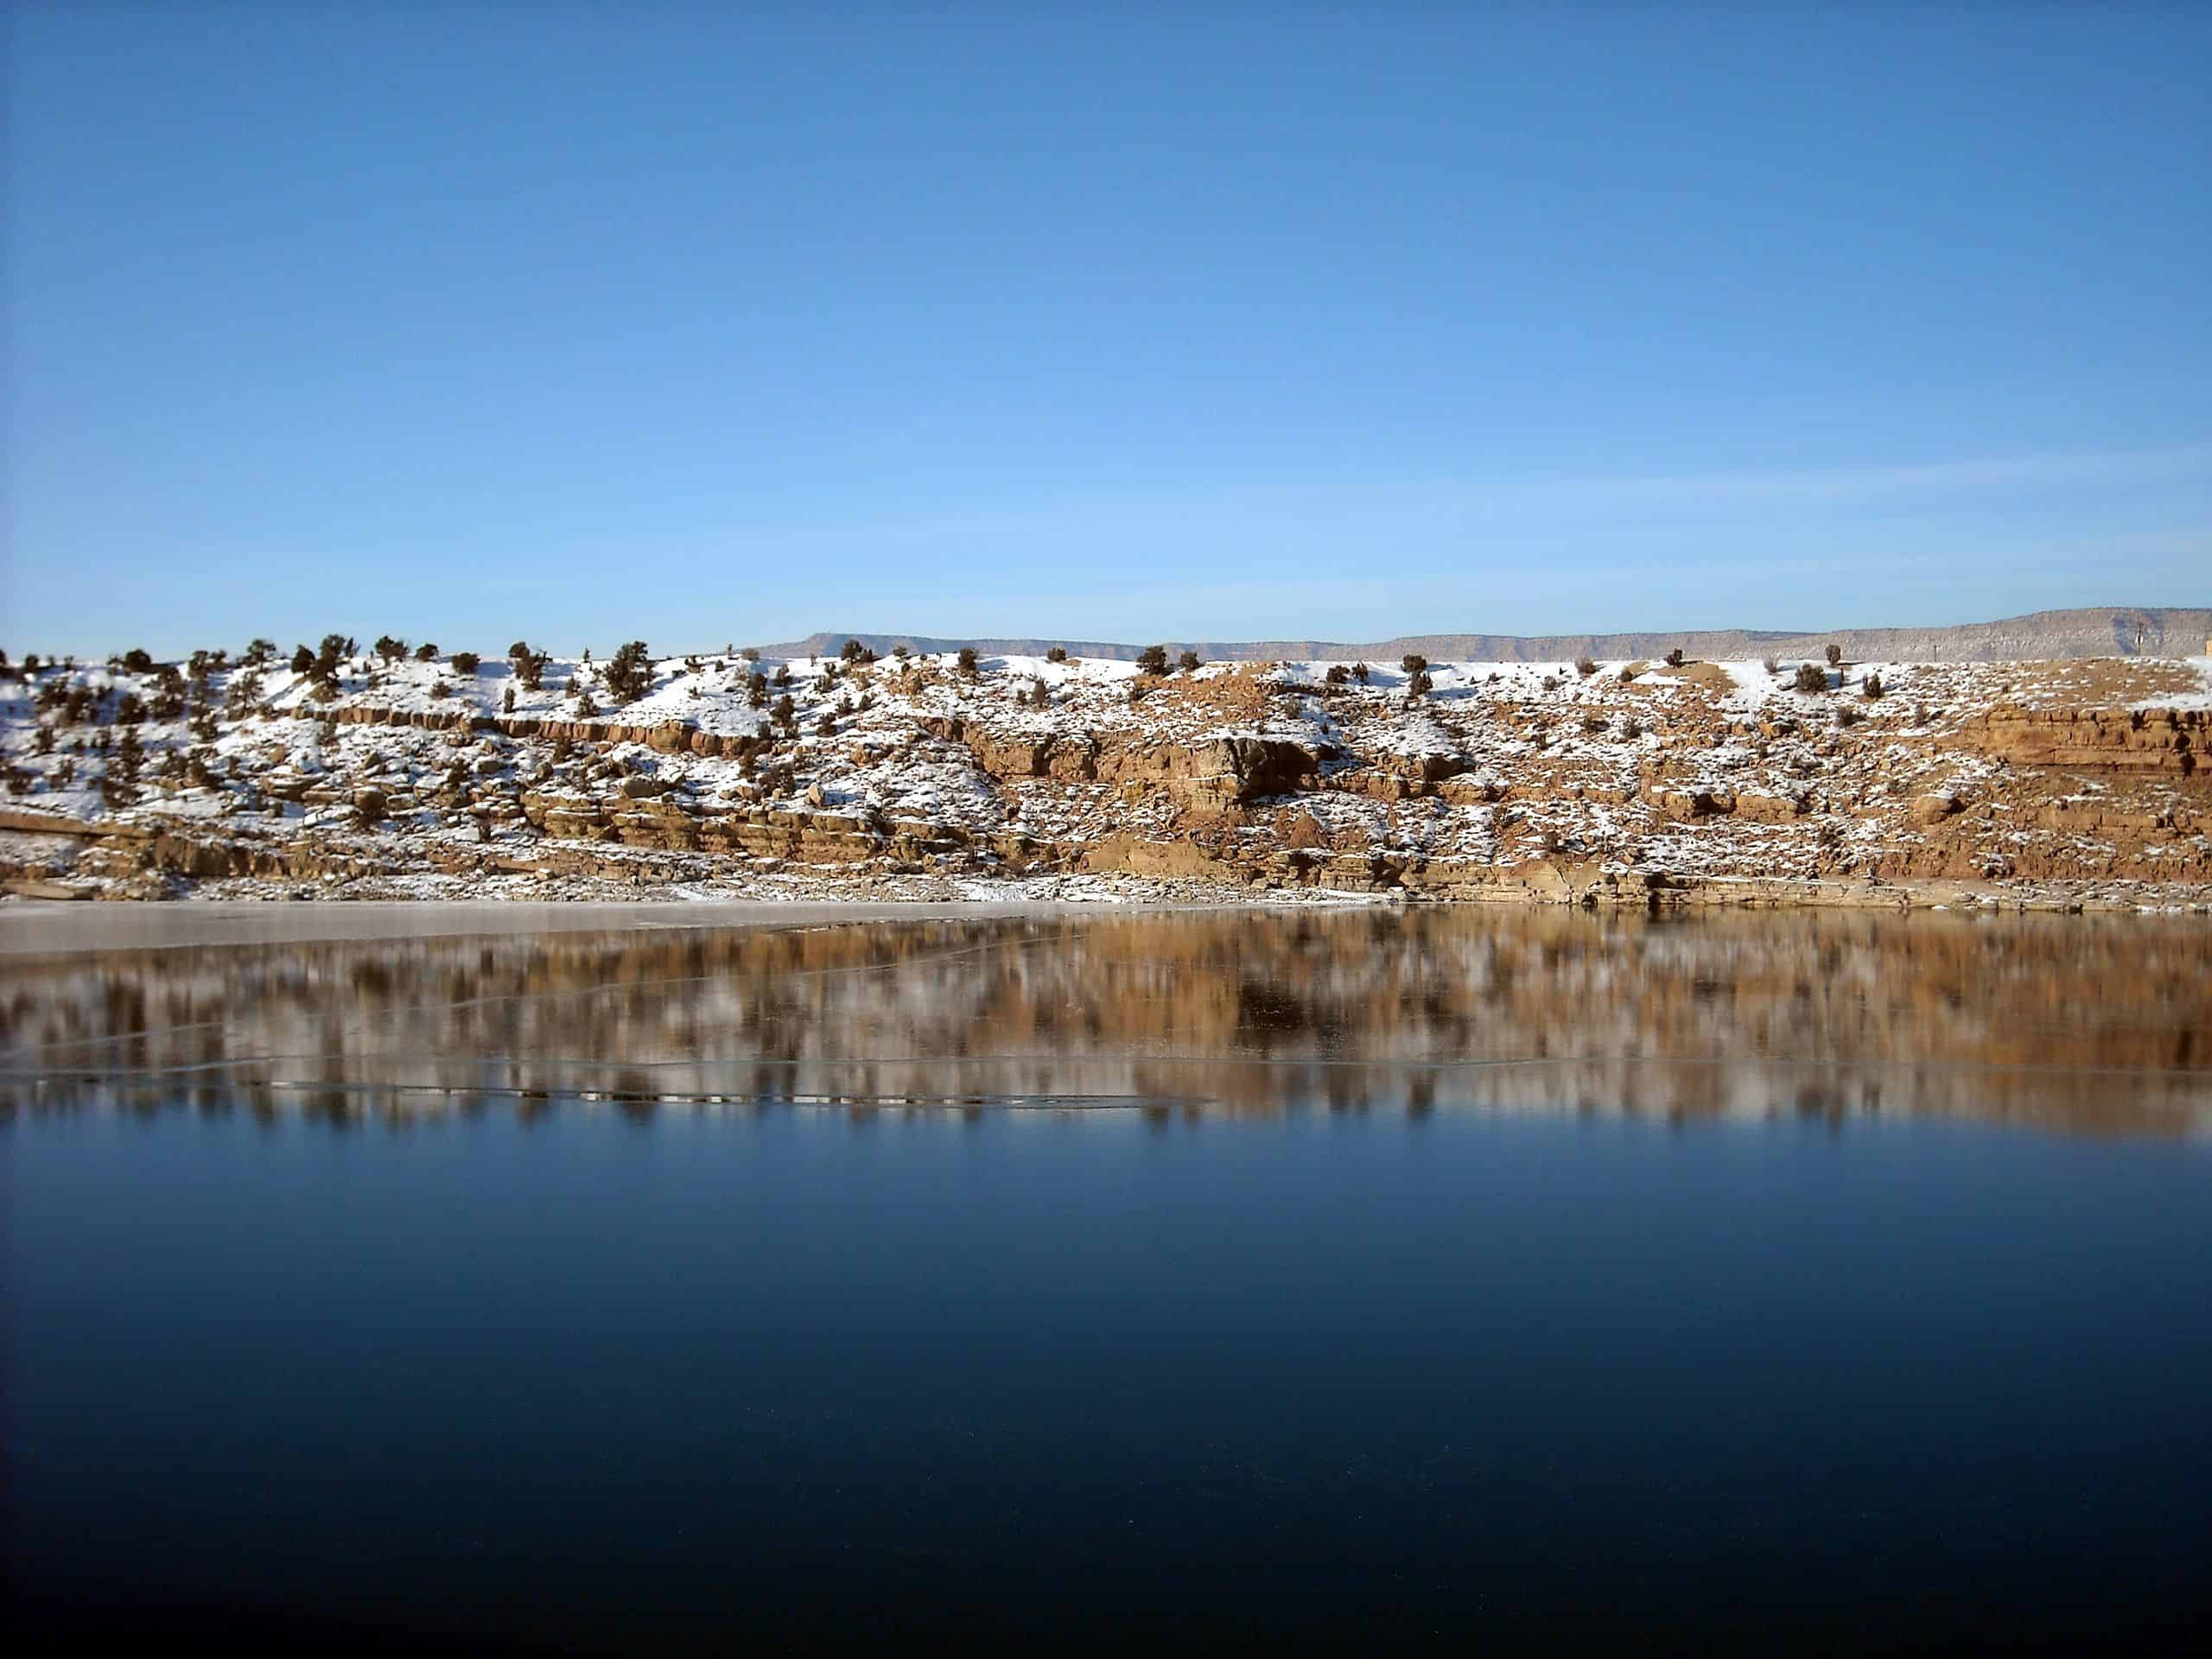 Starvation Reservoir, Utah by Staplegunther at English Wikipedia